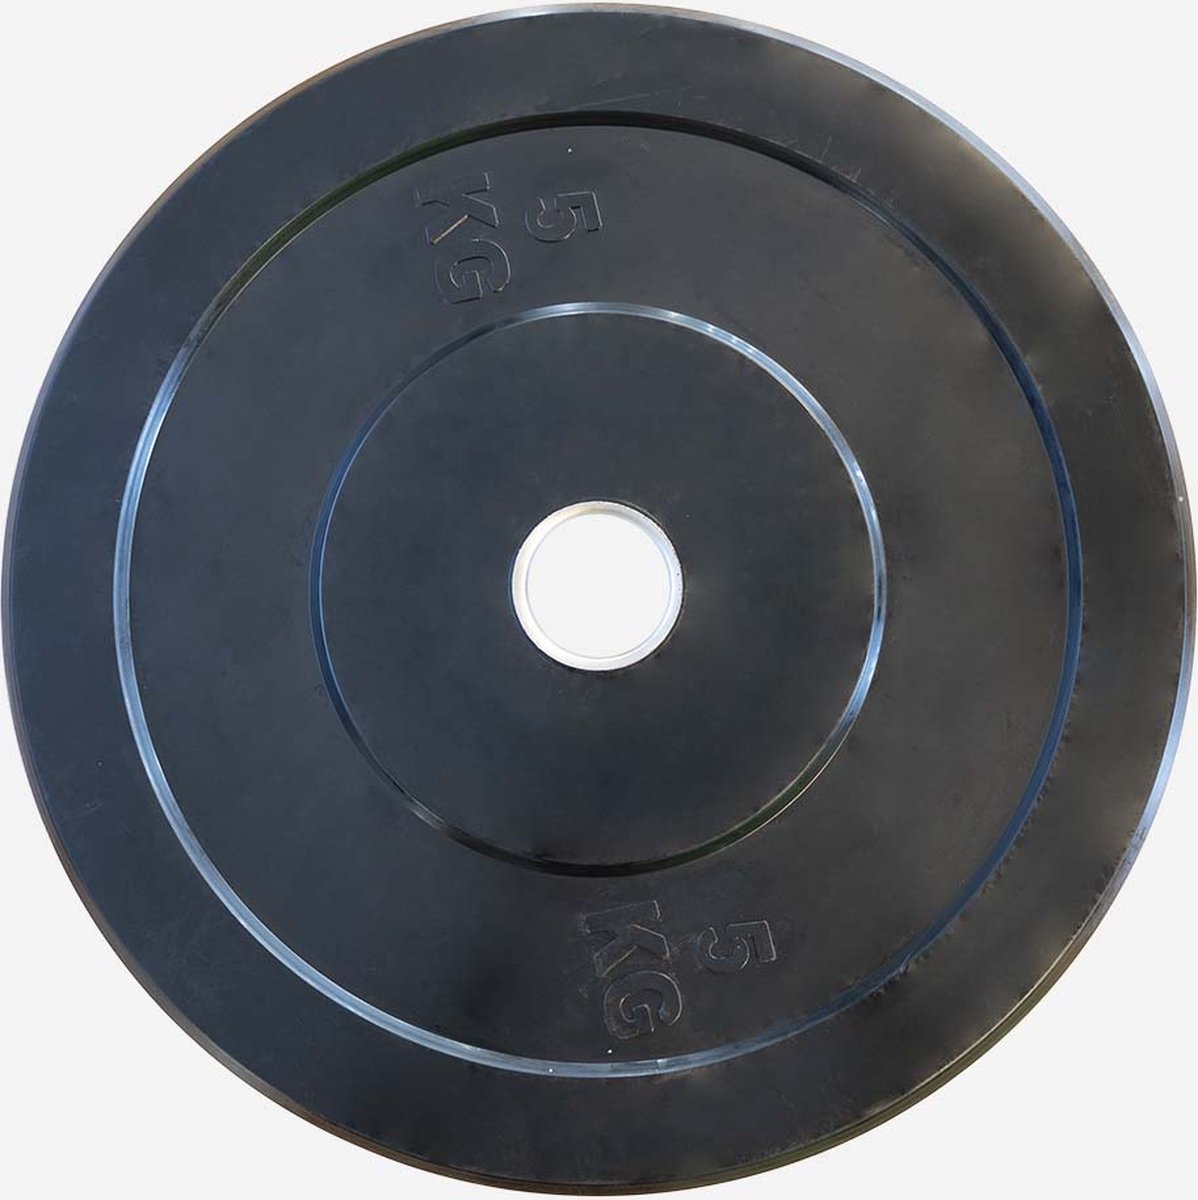 Black Bumper Plate 5kg - Krachttraining - halterschijf - fitness